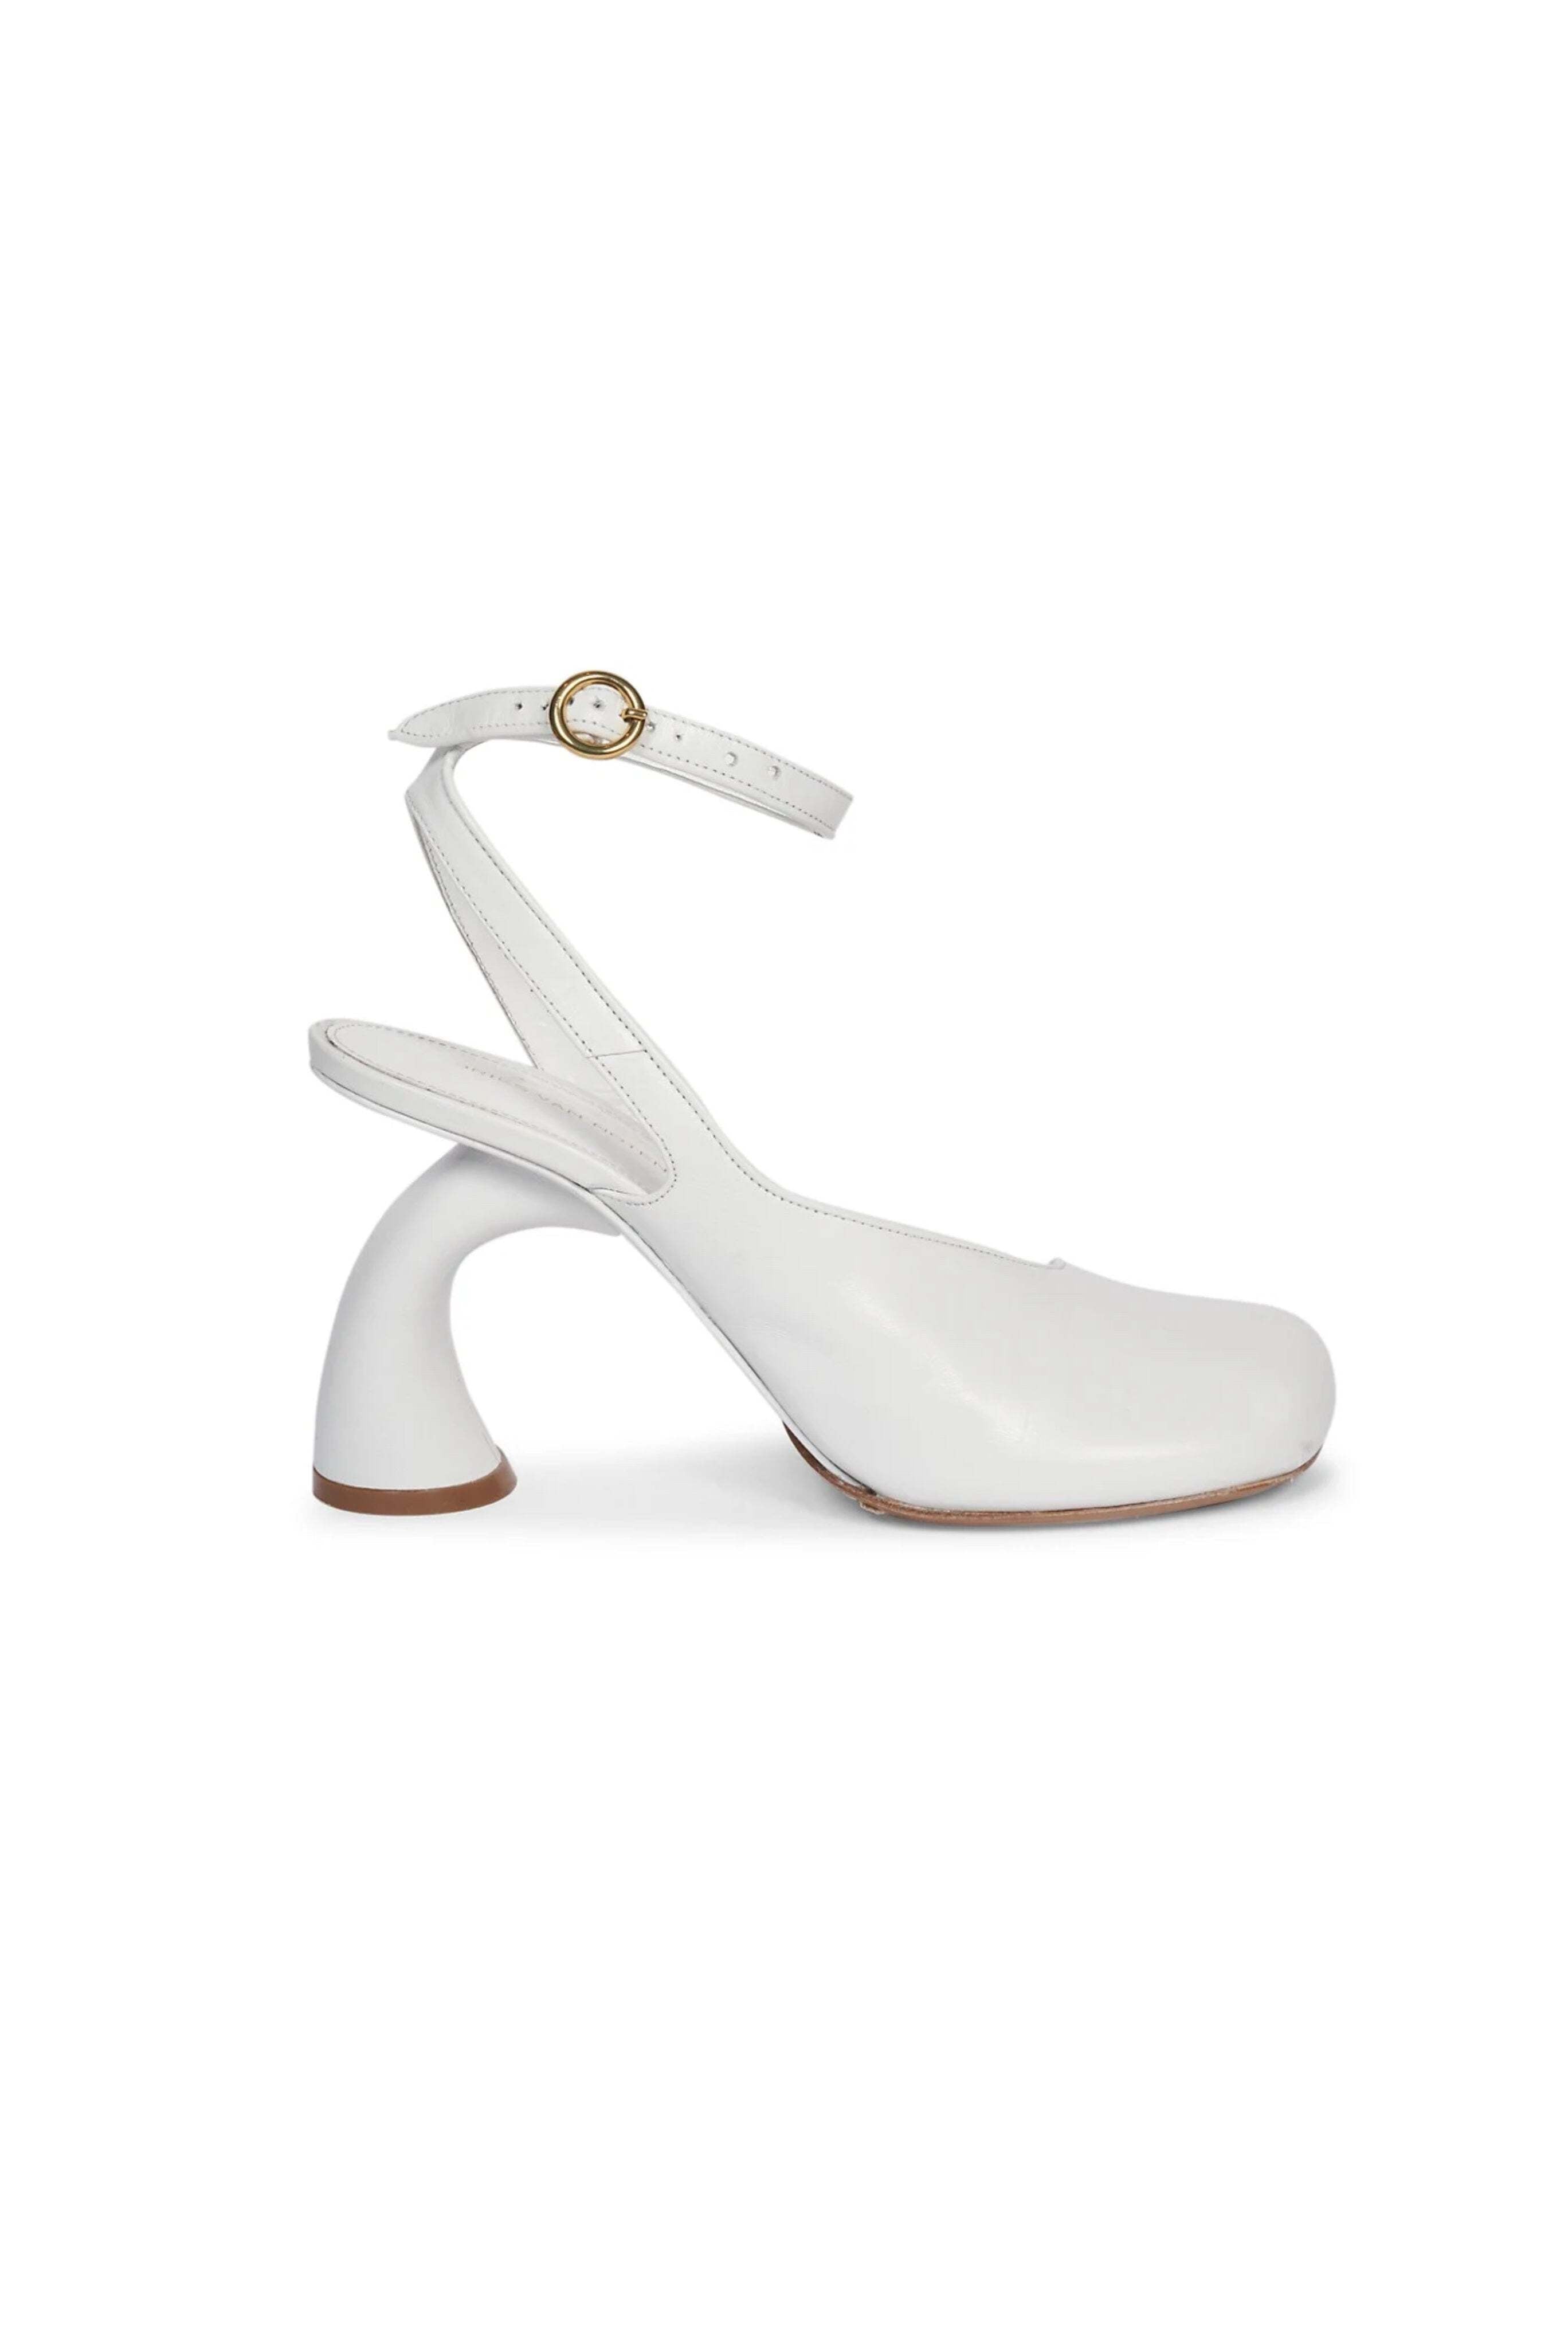 DRIES VAN NOTEN Asymmetric Virgo White Leather Sandals